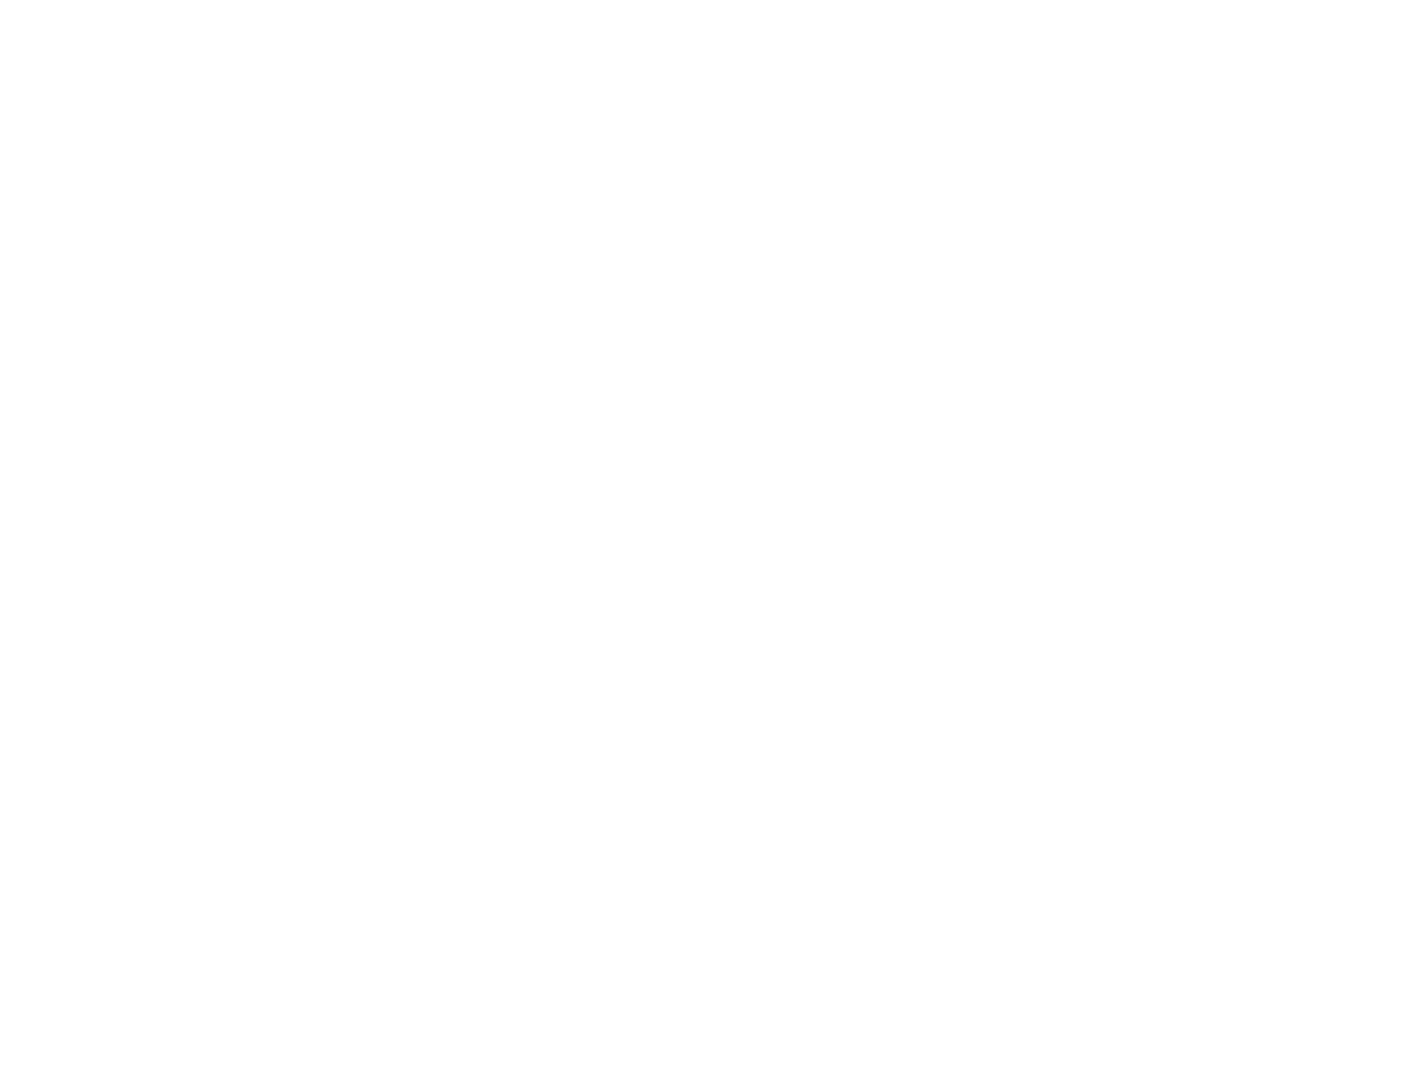 Virgin Music Latin